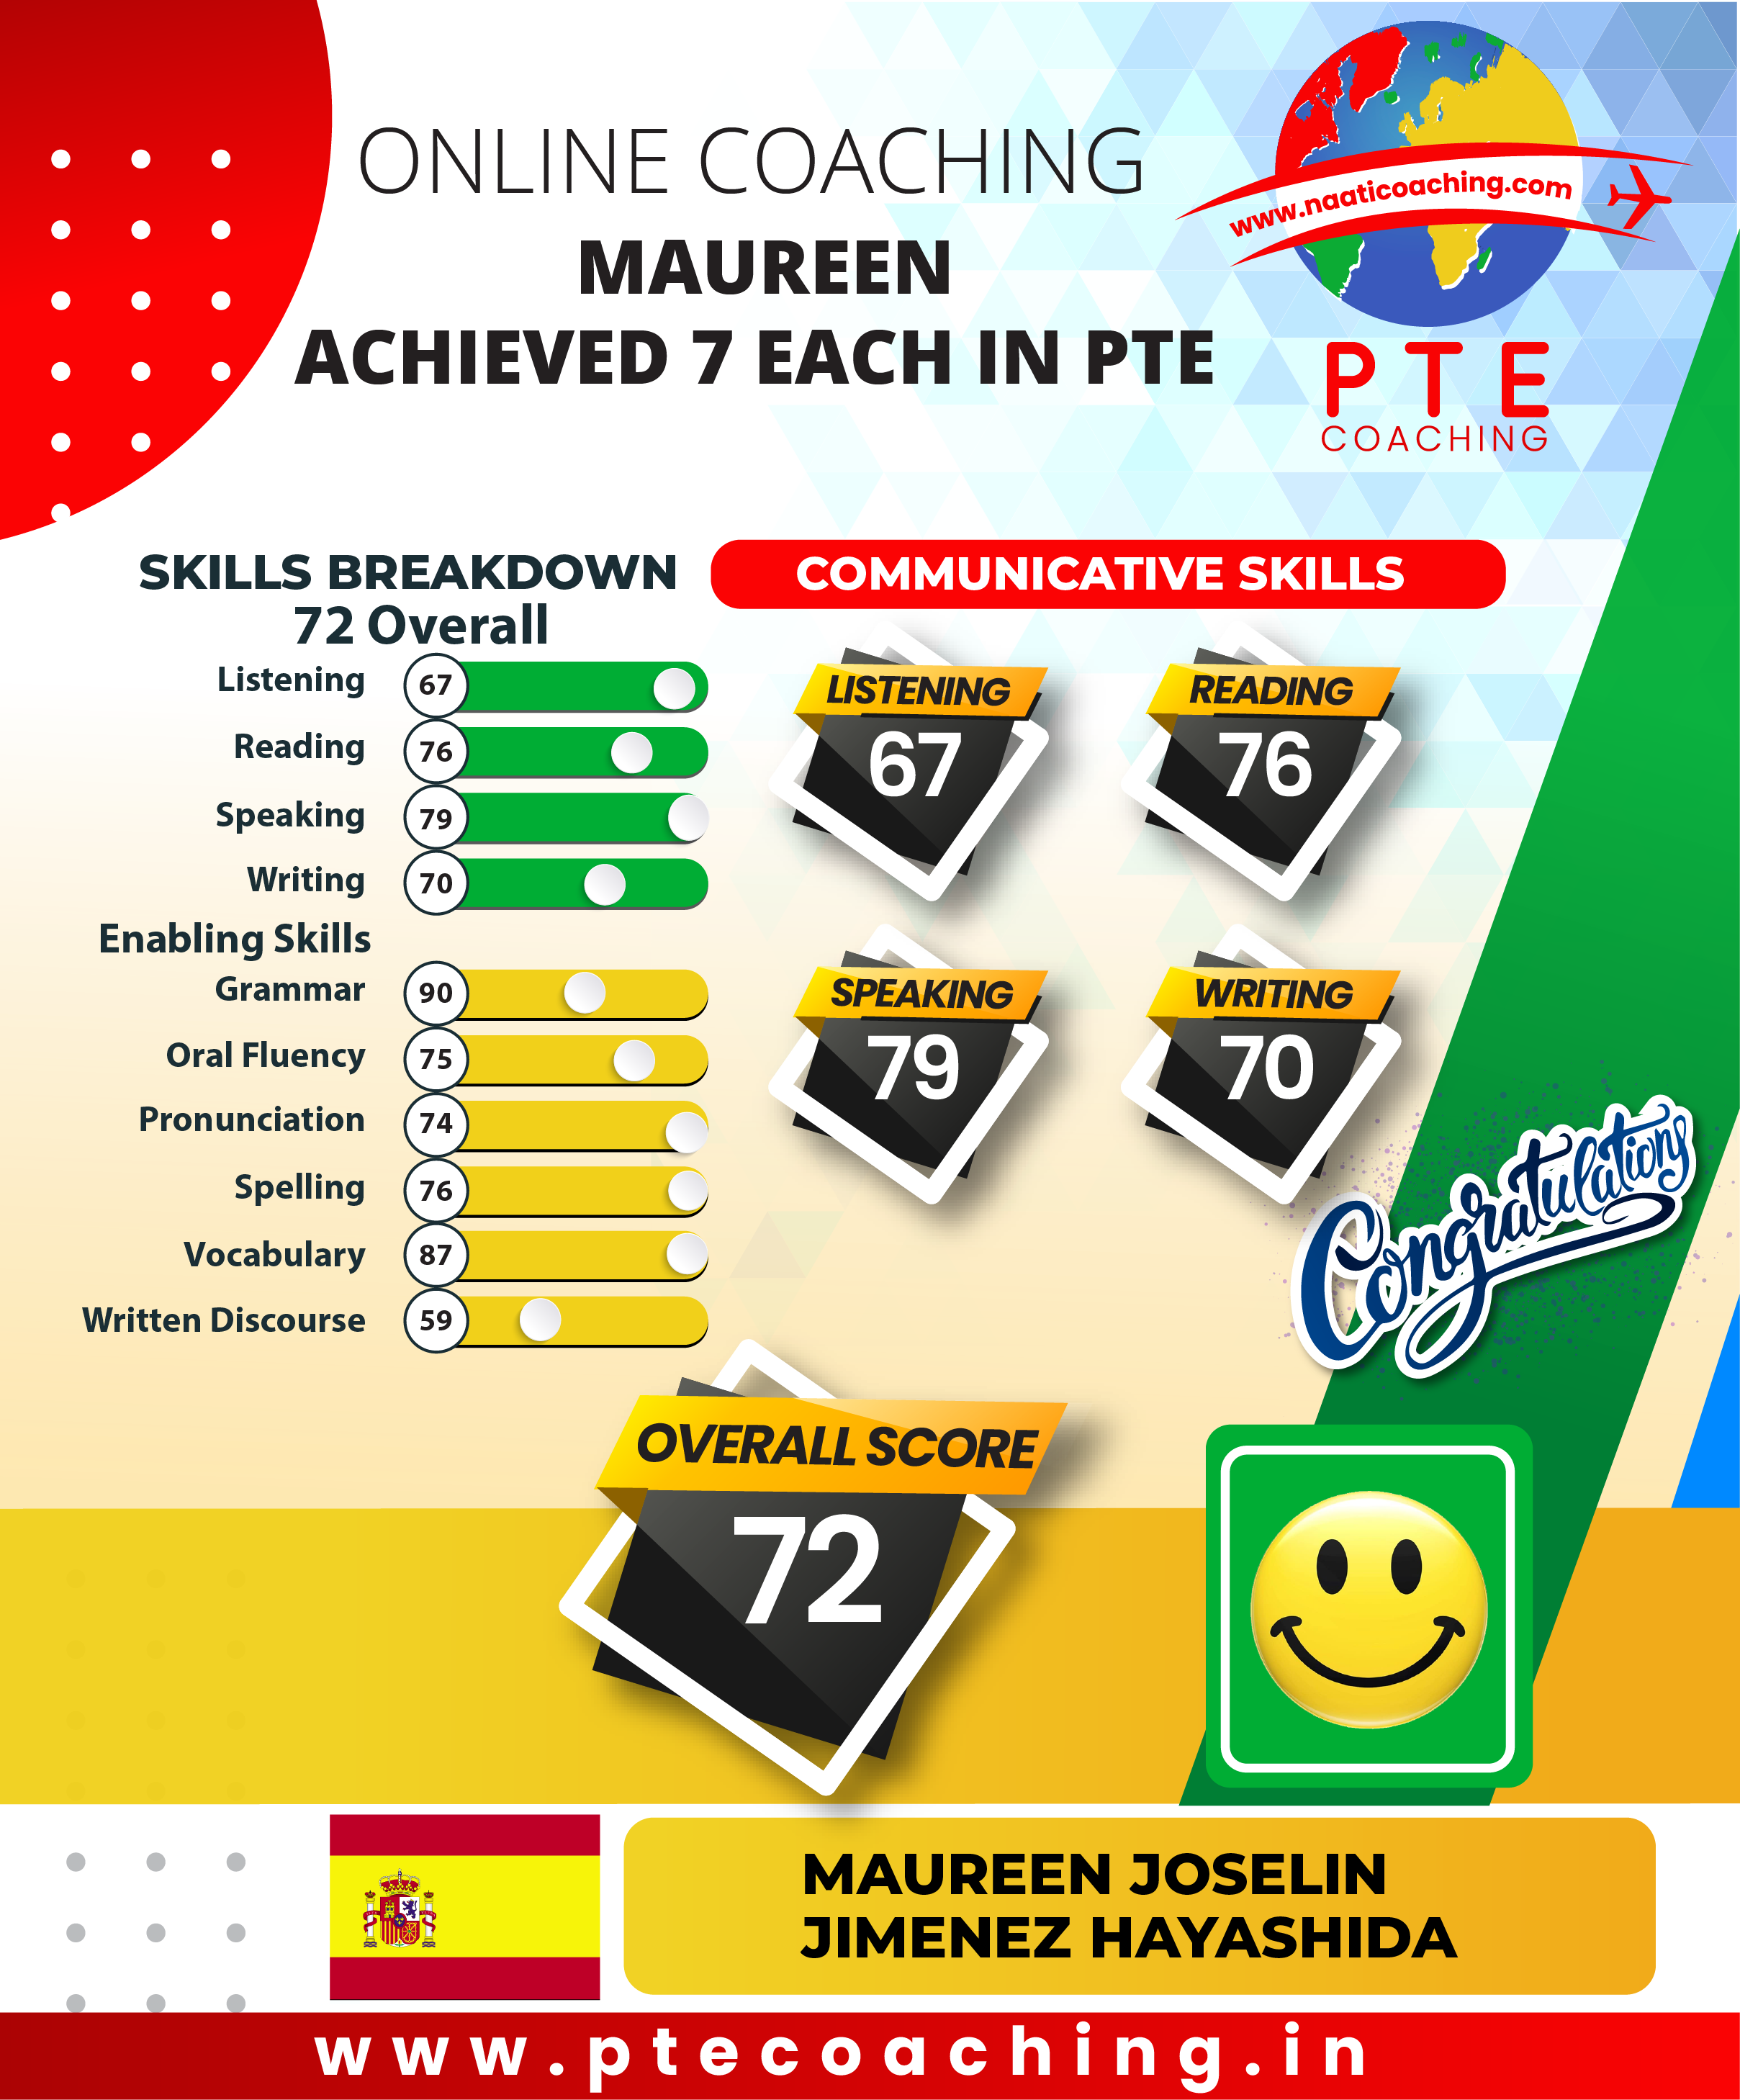 PTE Coaching Scorecard - Maureen achieved 7 each in PTE